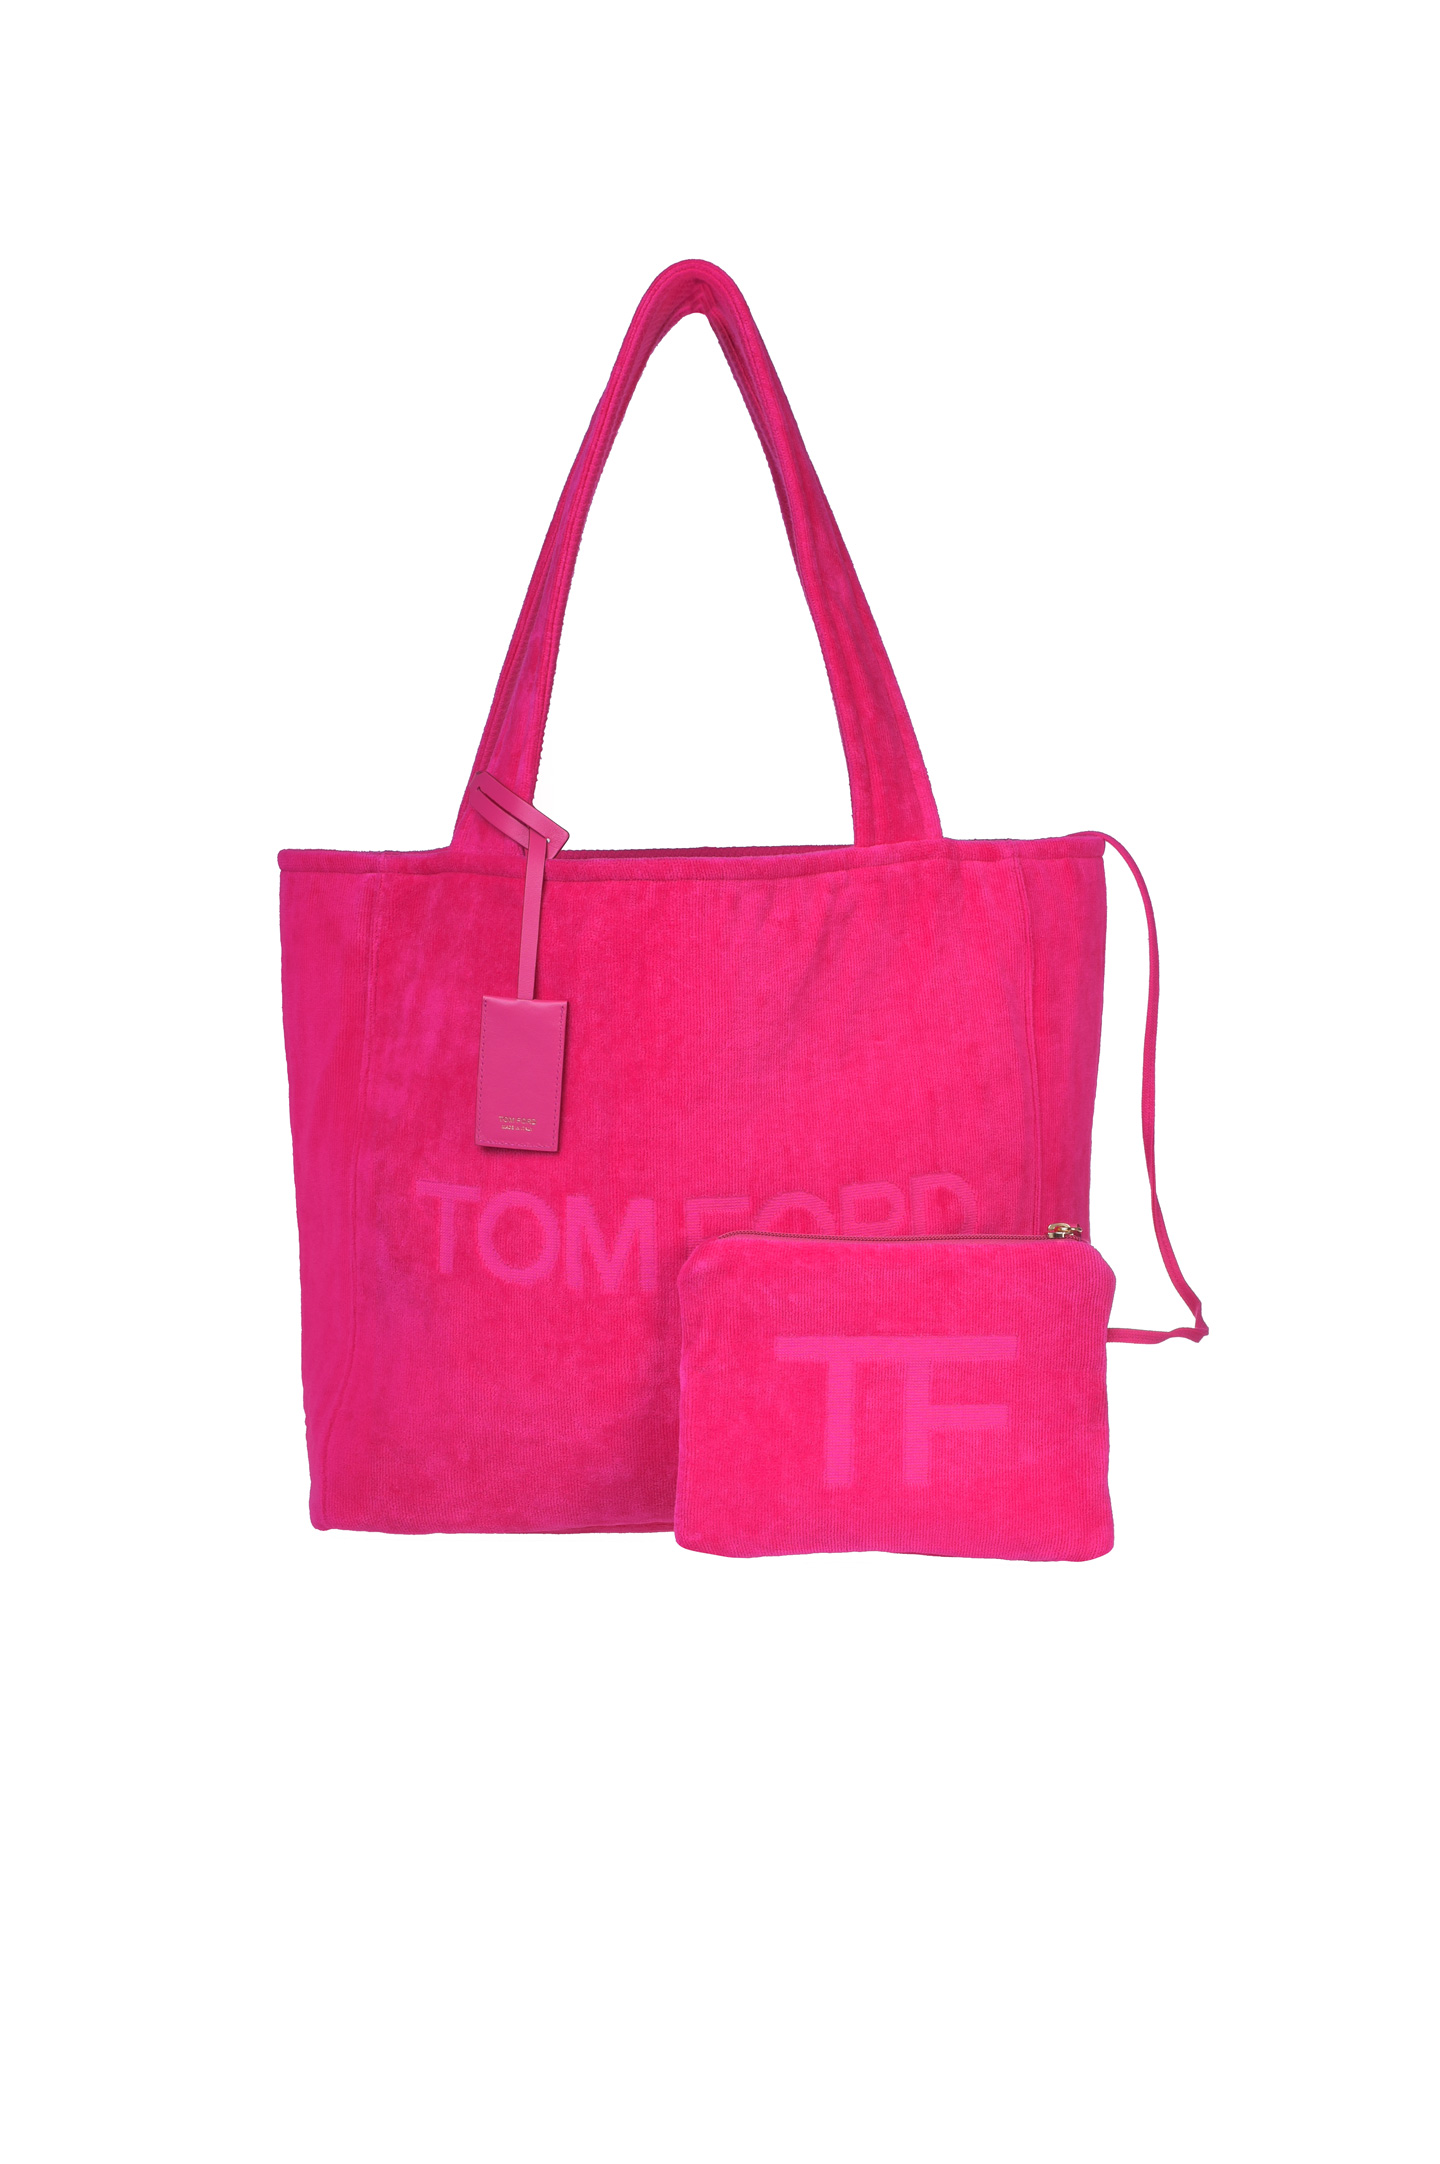 Сумка TOM FORD L1438T TTO001, цвет: Розовый, Женский